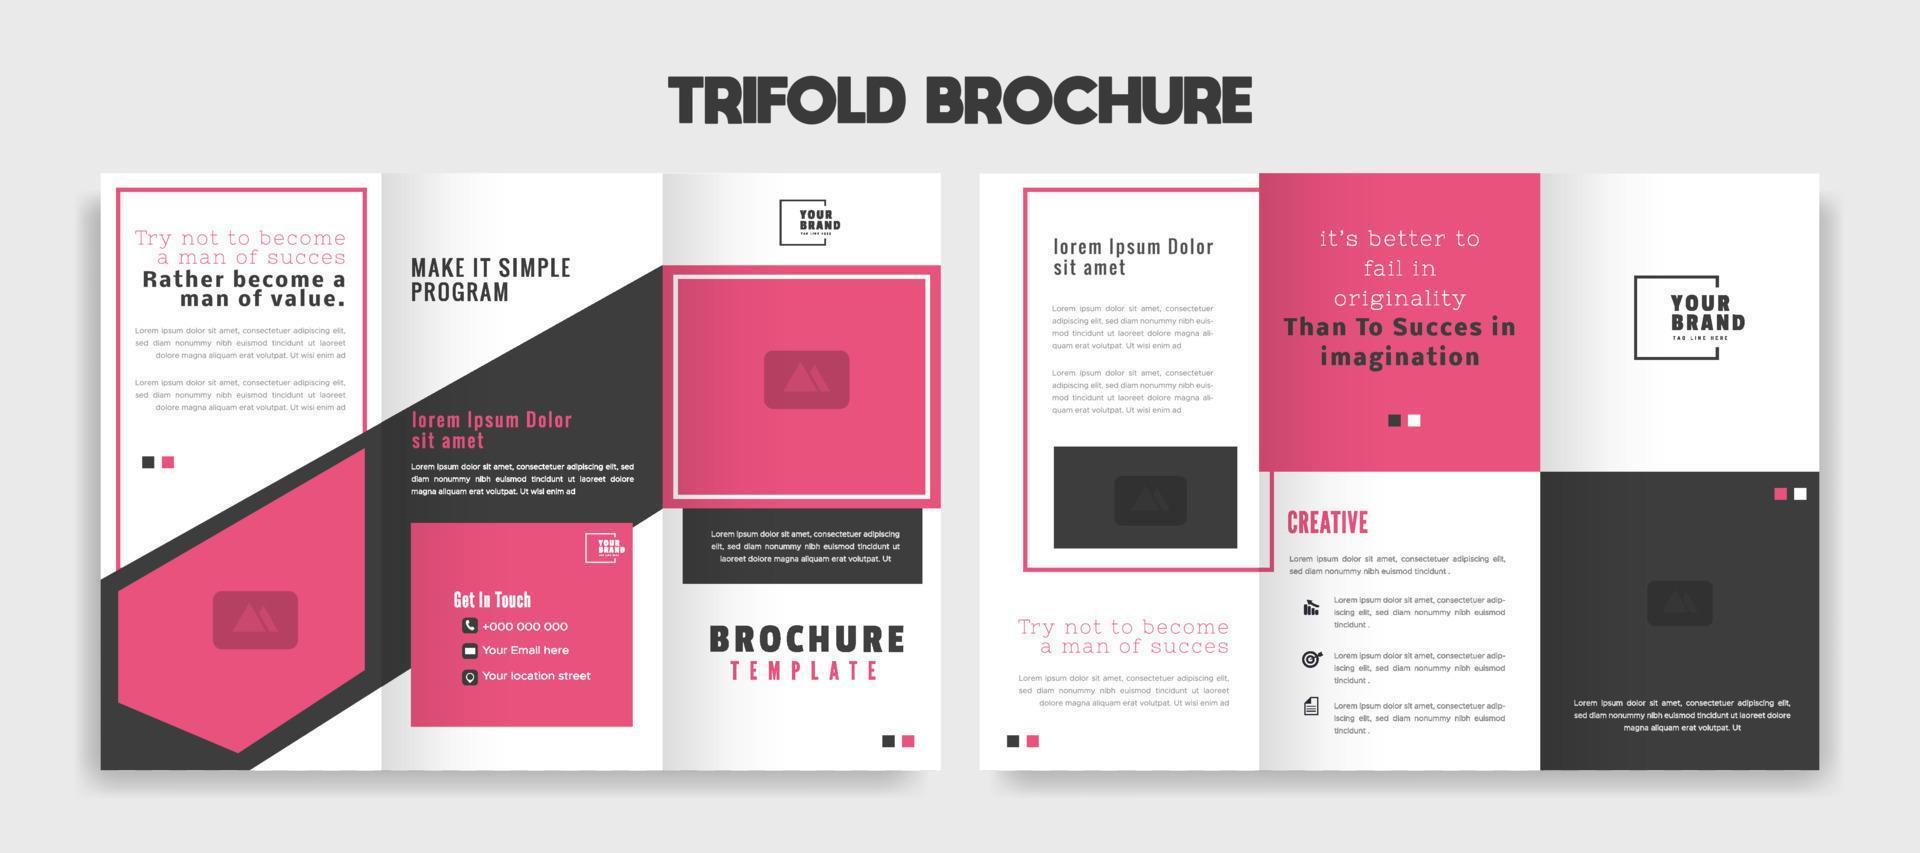 trifold brochure template design vector